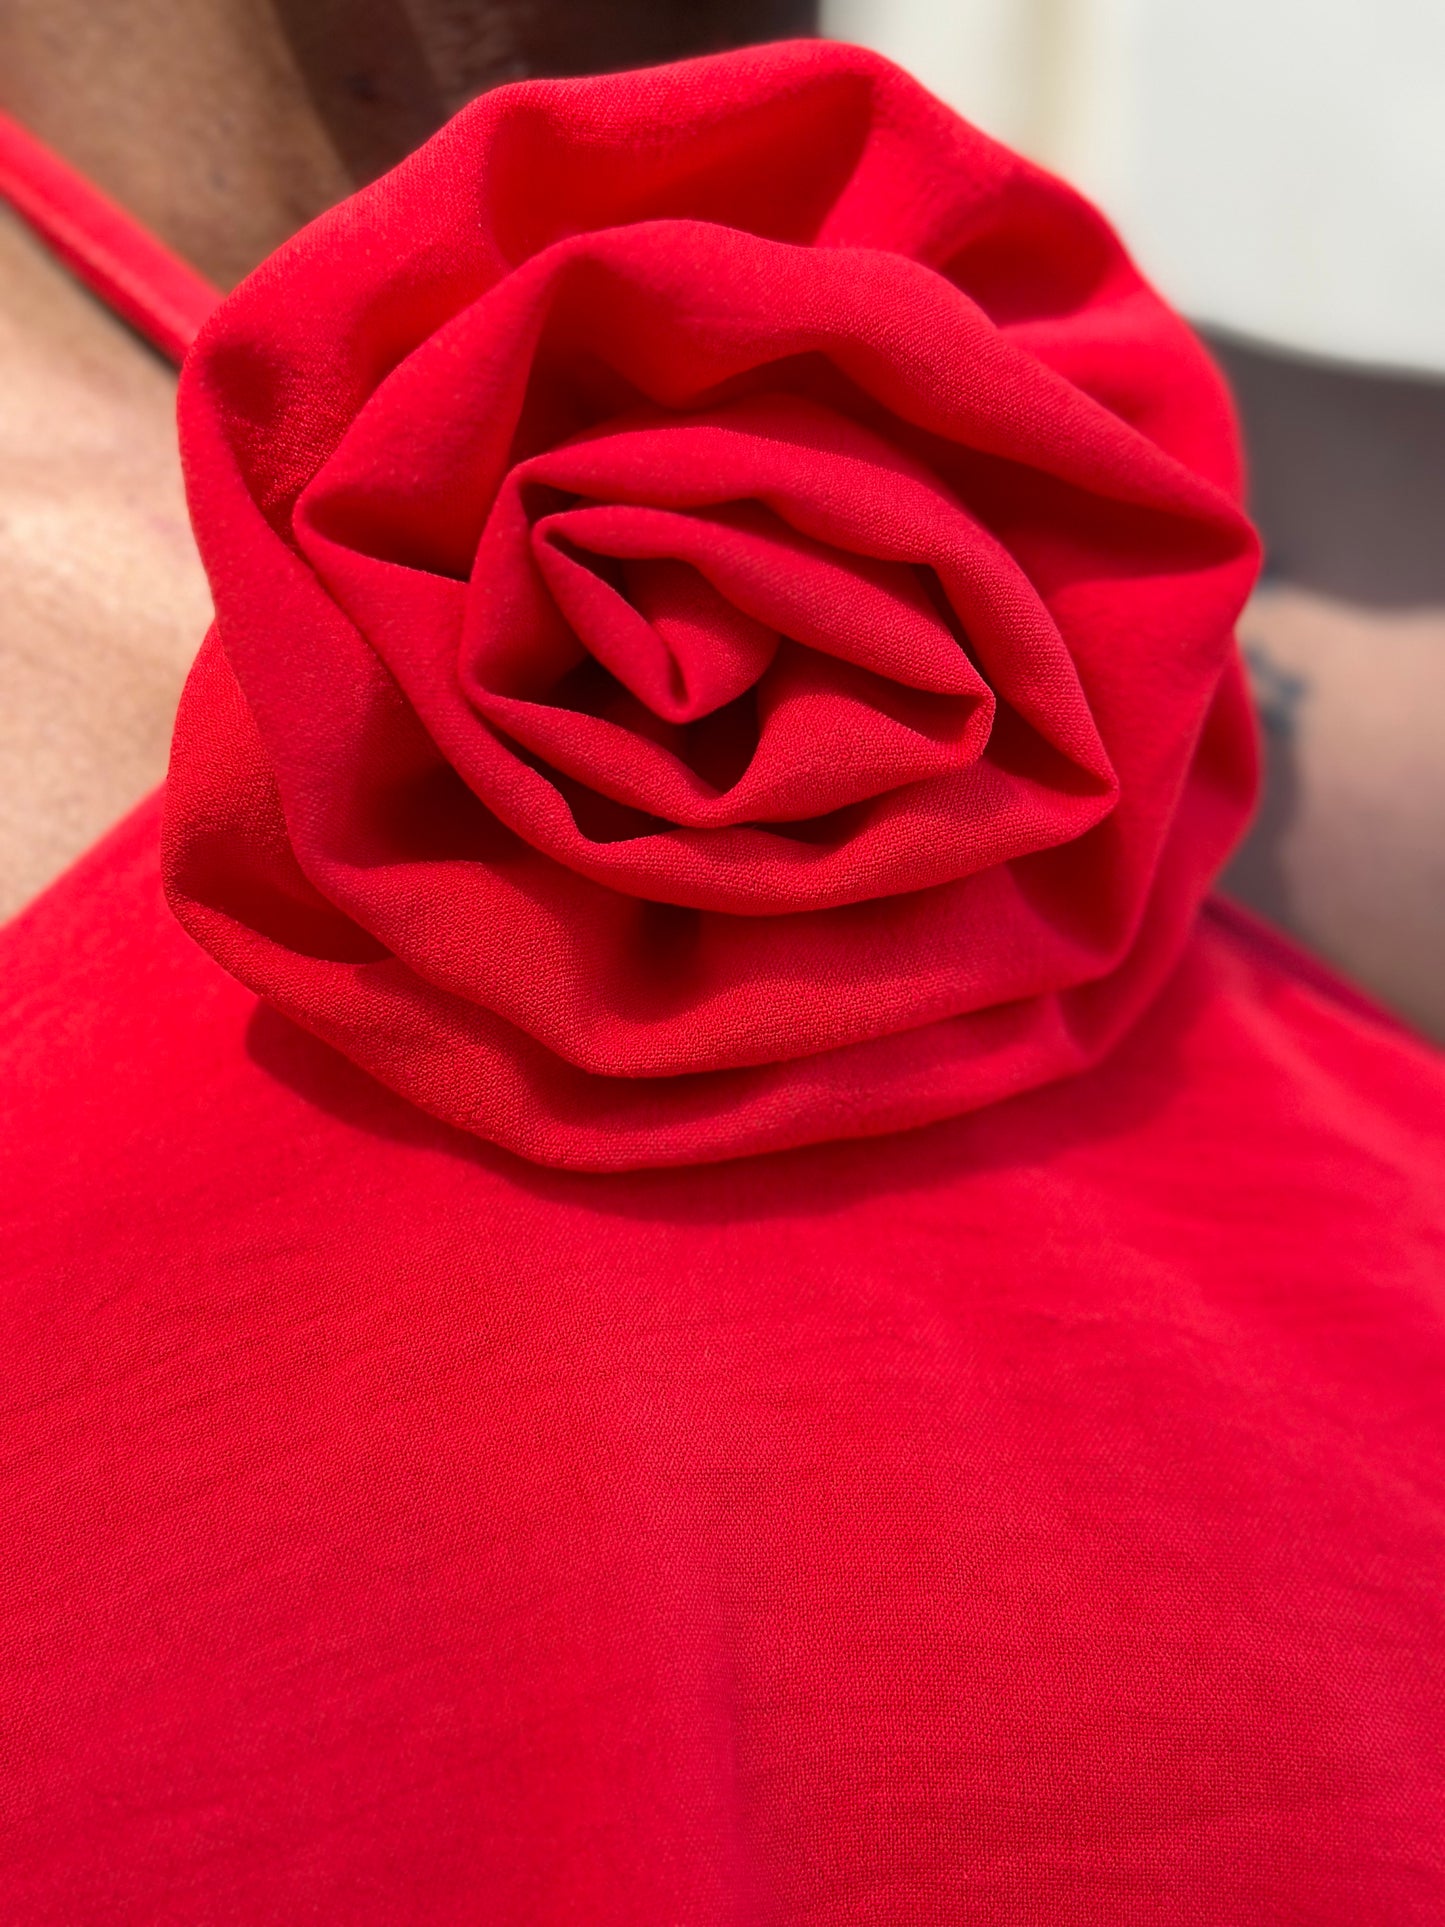 “Radiant Rose” Top